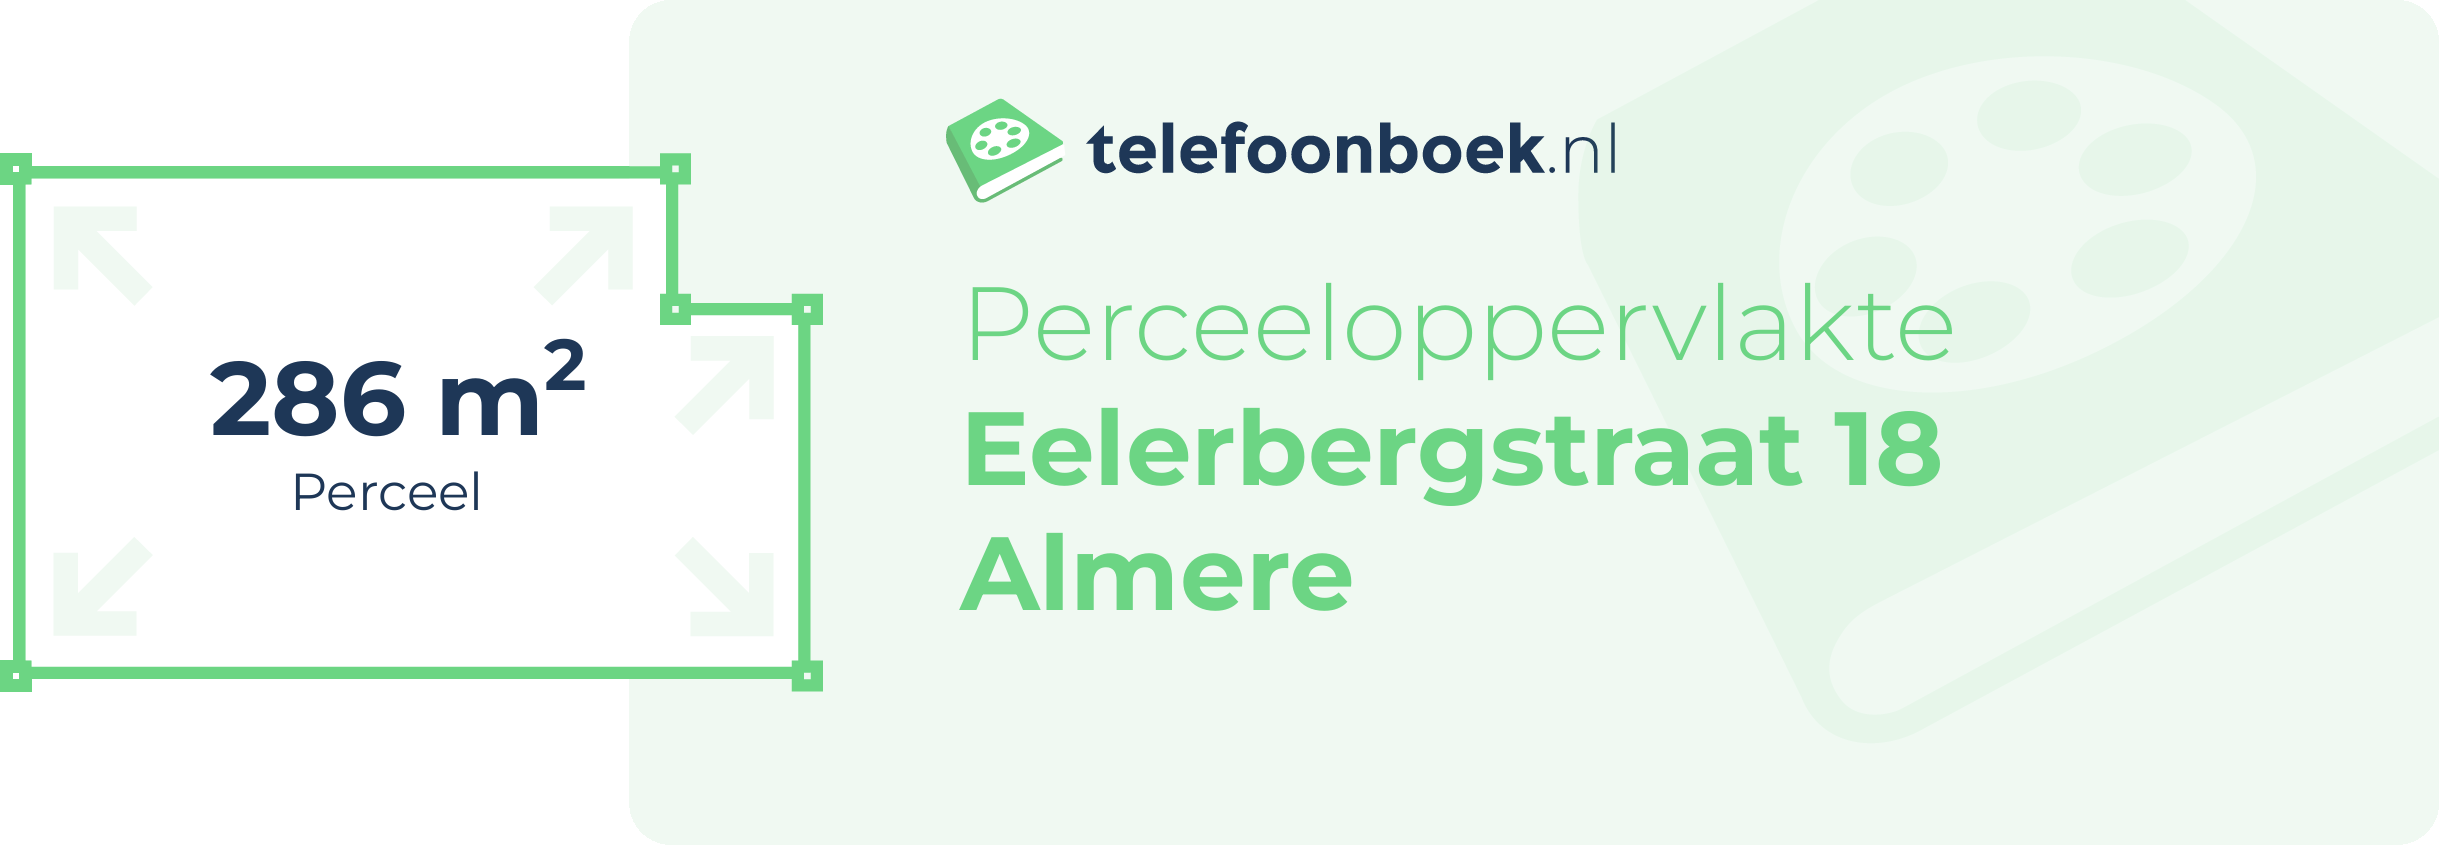 Perceeloppervlakte Eelerbergstraat 18 Almere